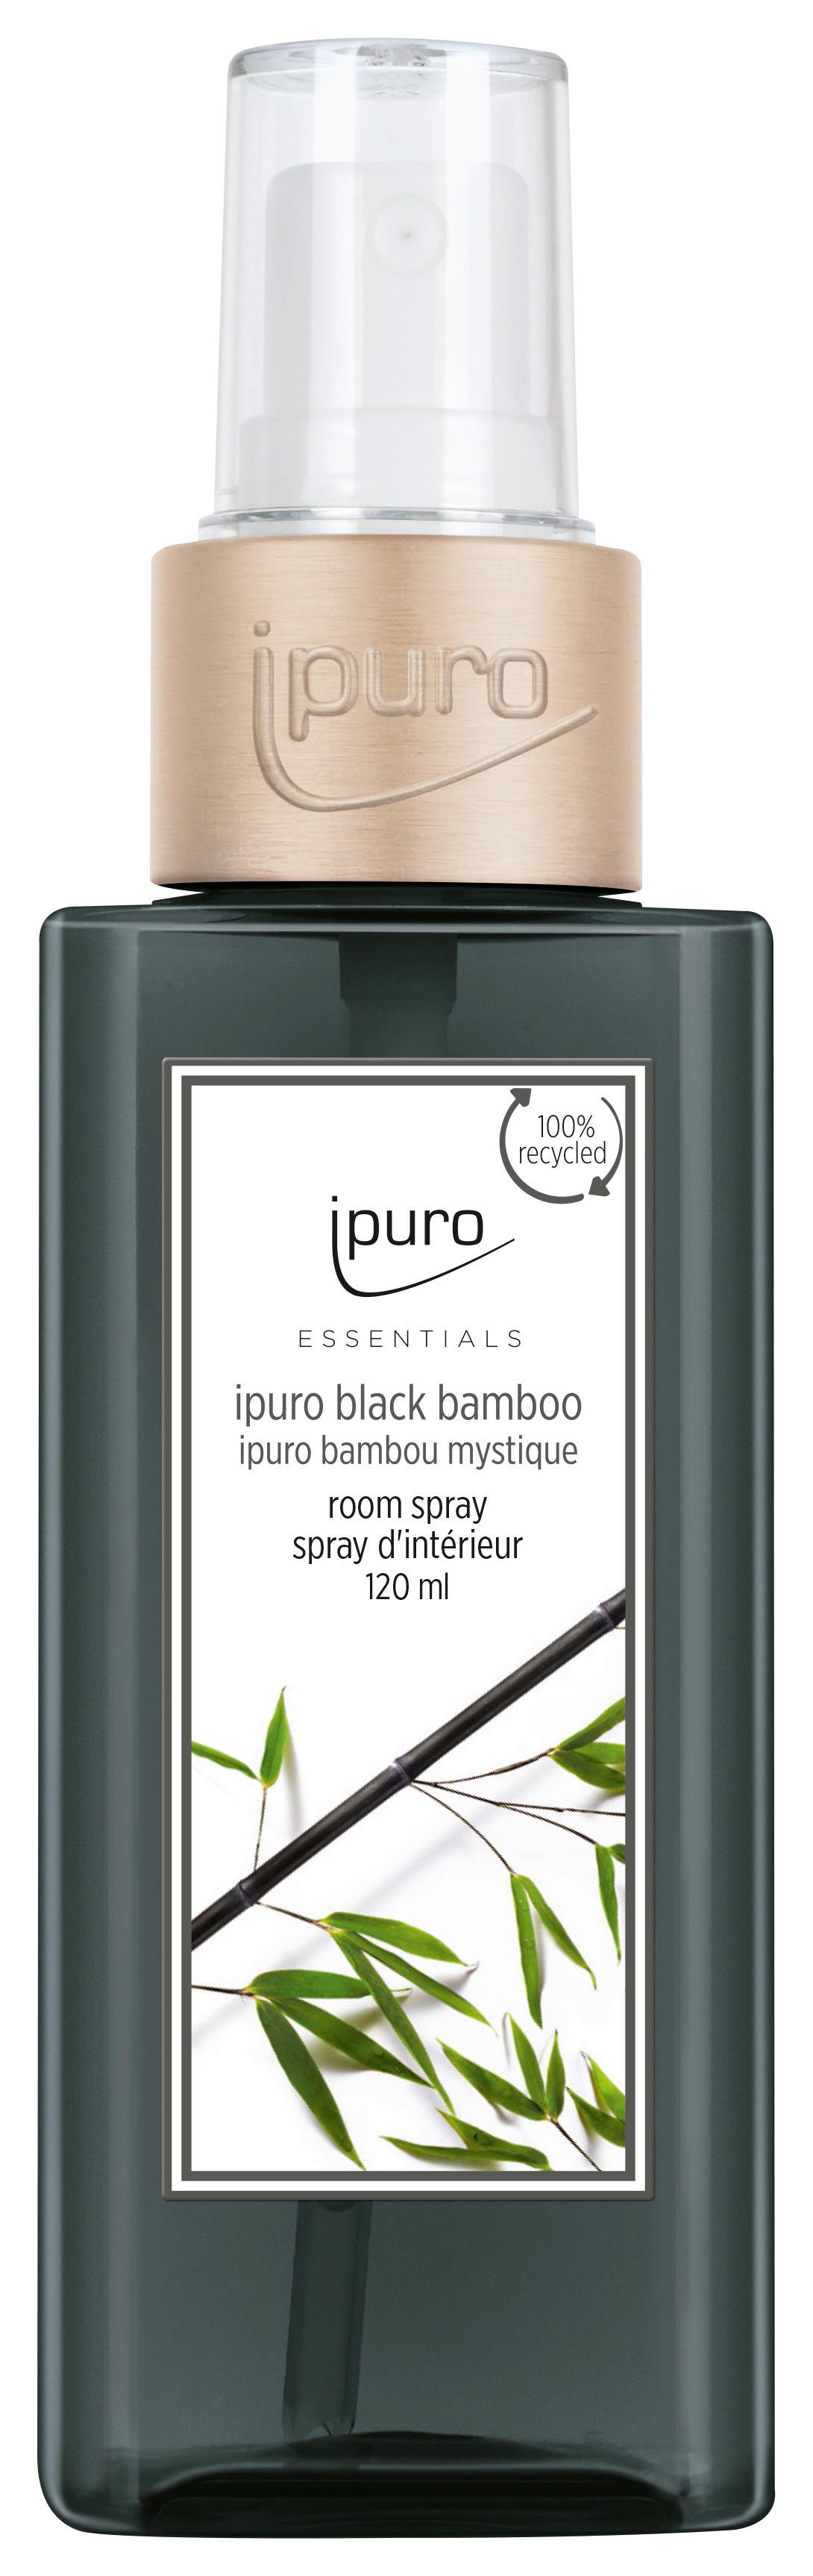 ipuro Essentials Black Bamboo car air freshener